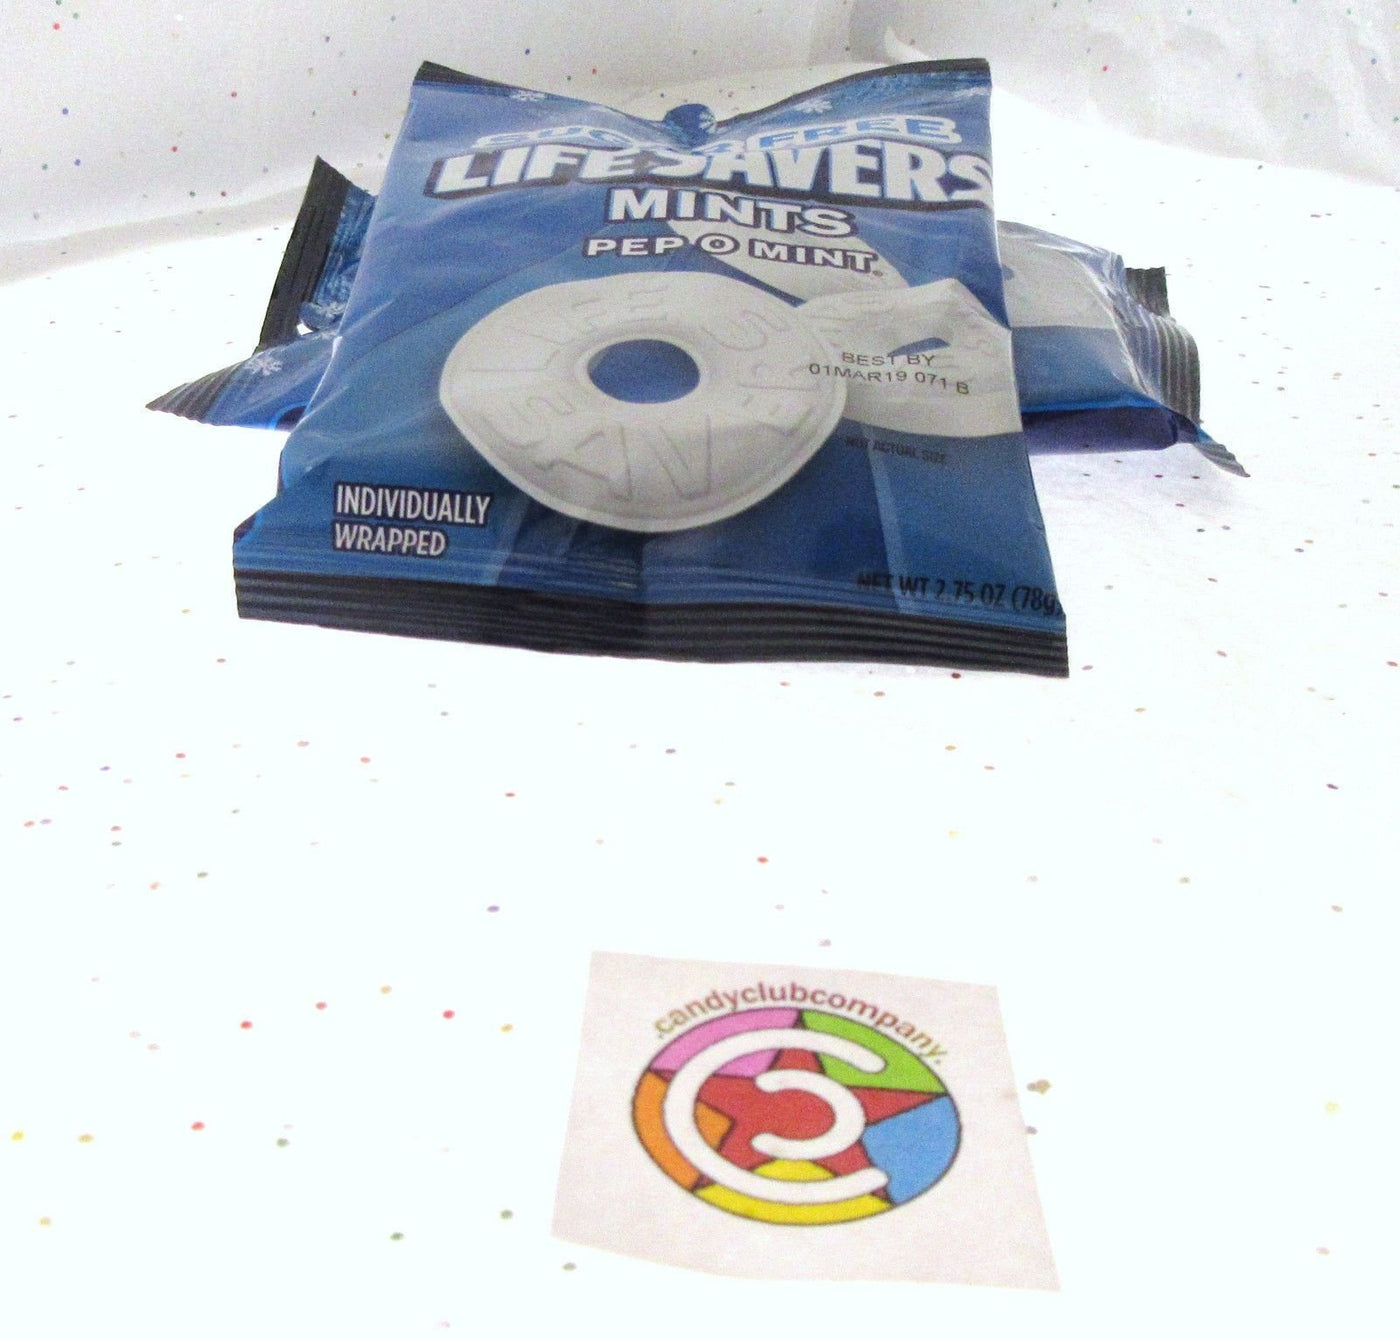 LifeSavers SUGAR FREE Pep O Mint 2.75 oz Peppermint Candy Candies Lot of 2 sweet